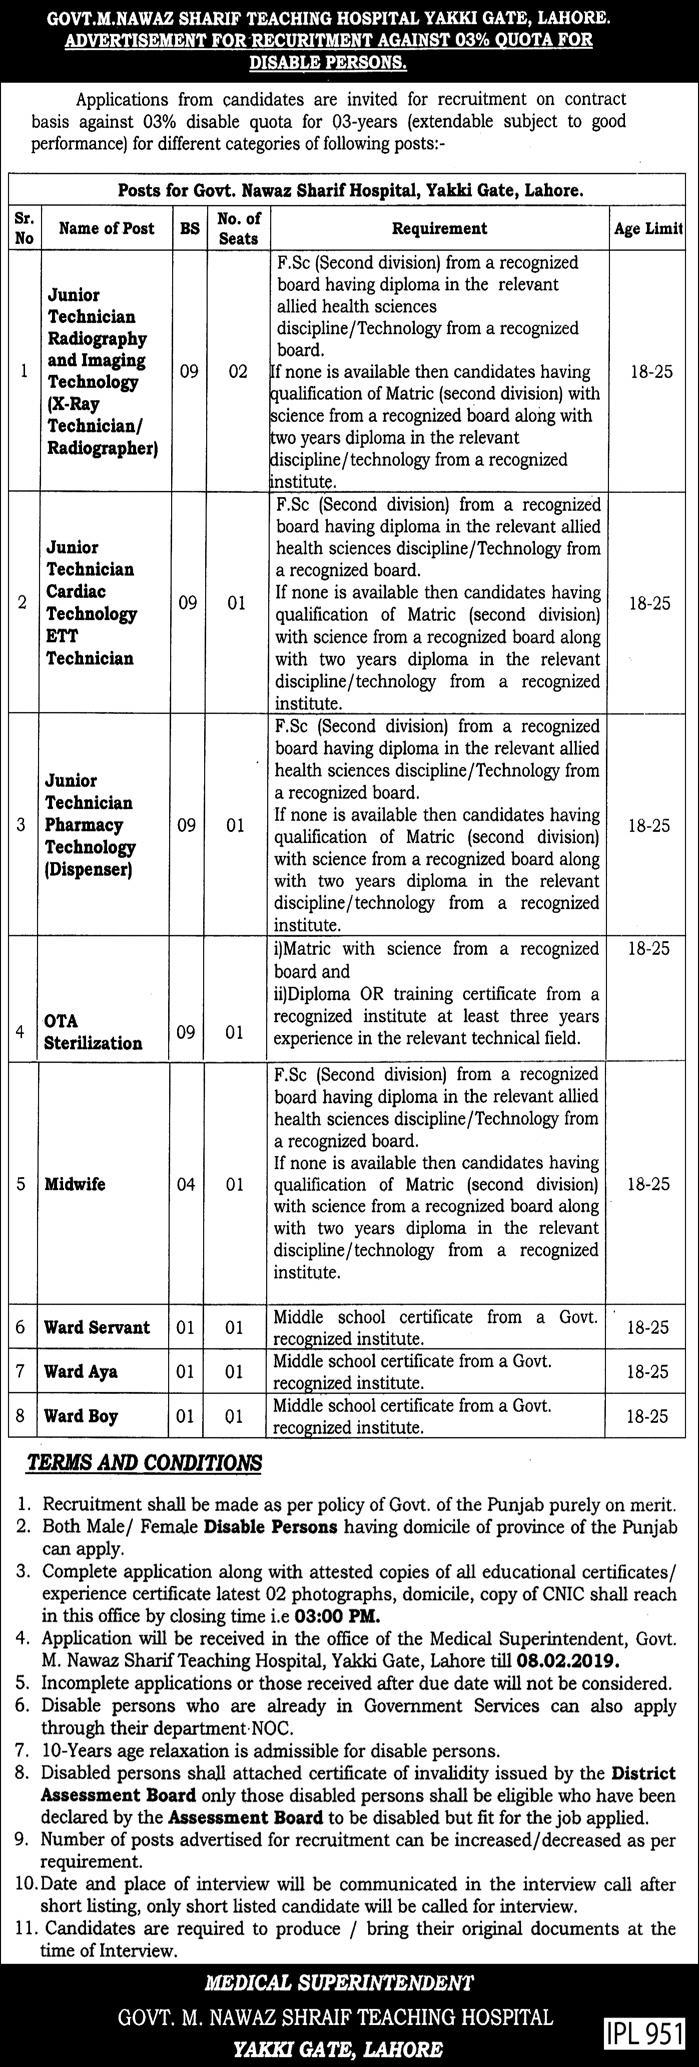 Govt M. Nawaz Sharif Teaching Hospital Jobs 2019 for 9+ Technicians & Support Staff (Disable Quota)